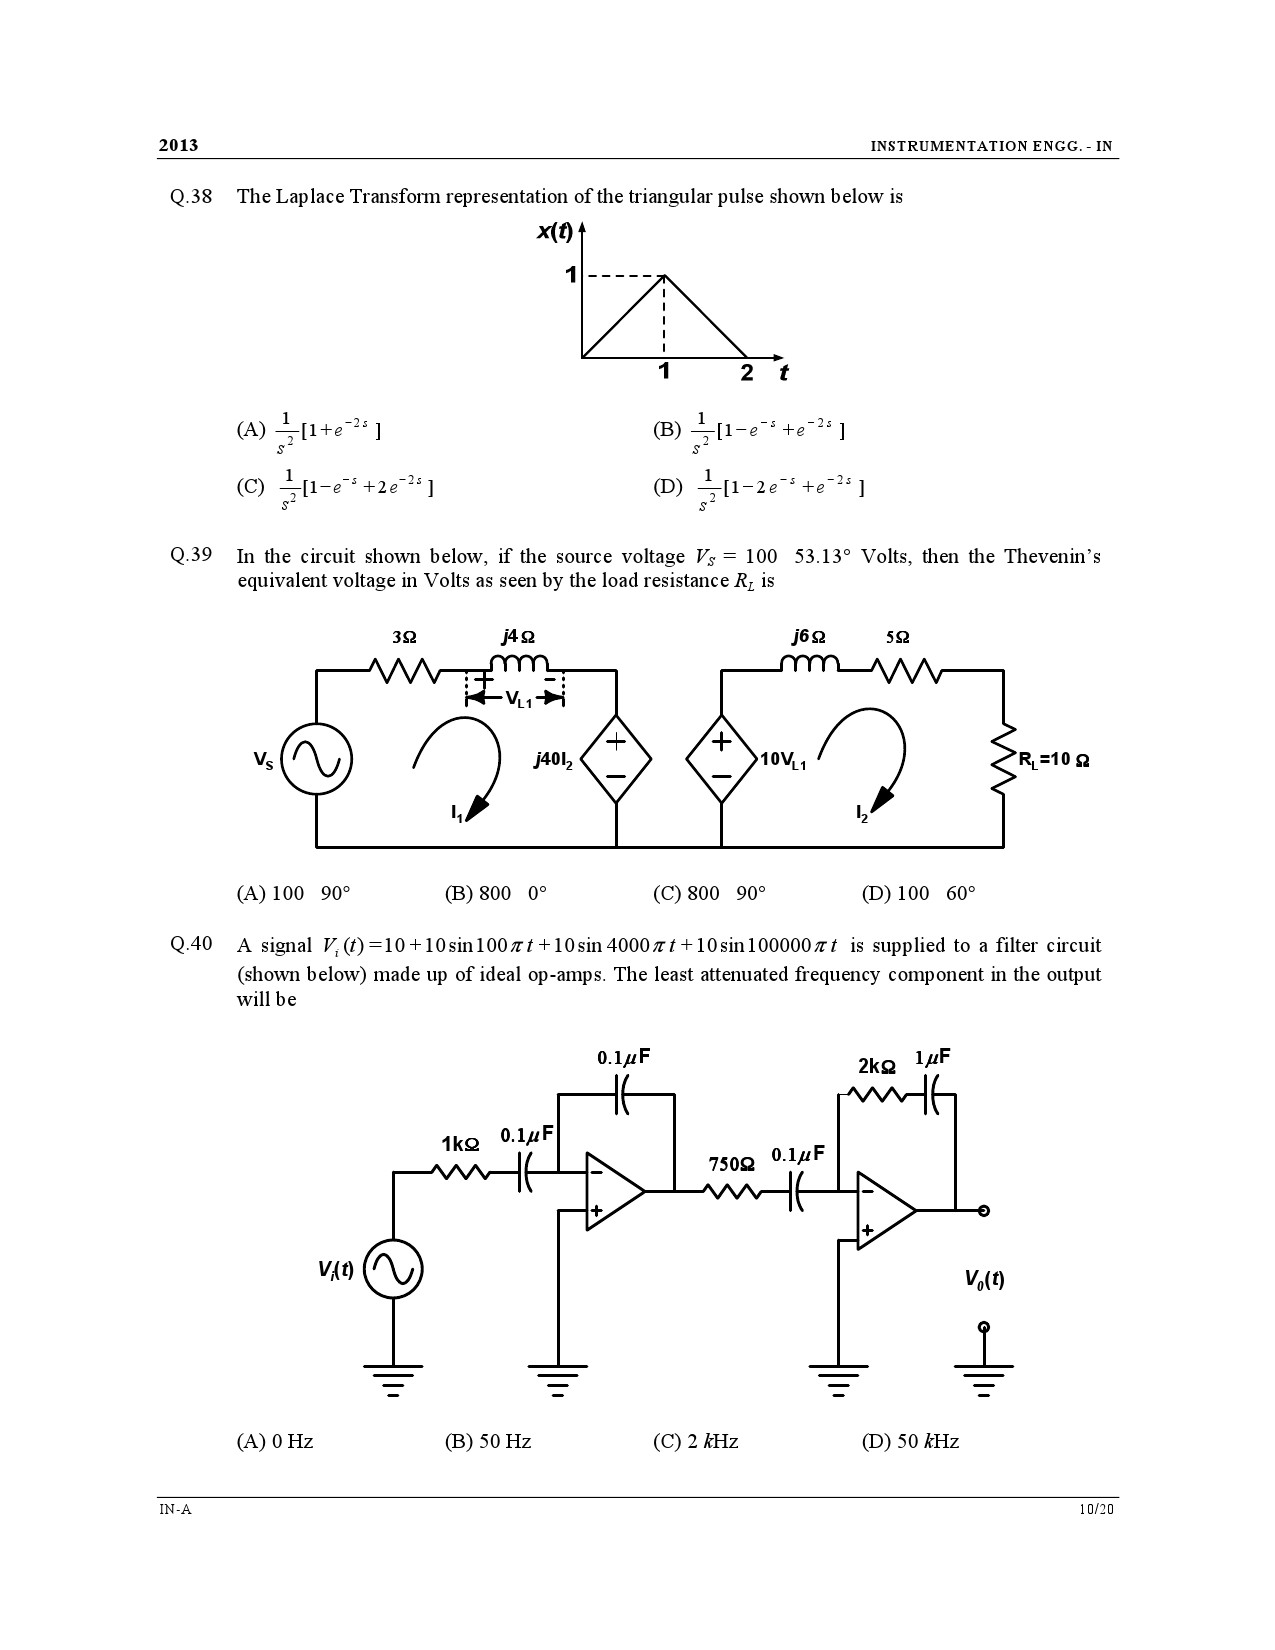 GATE Exam Question Paper 2013 Instrumentation Engineering 10